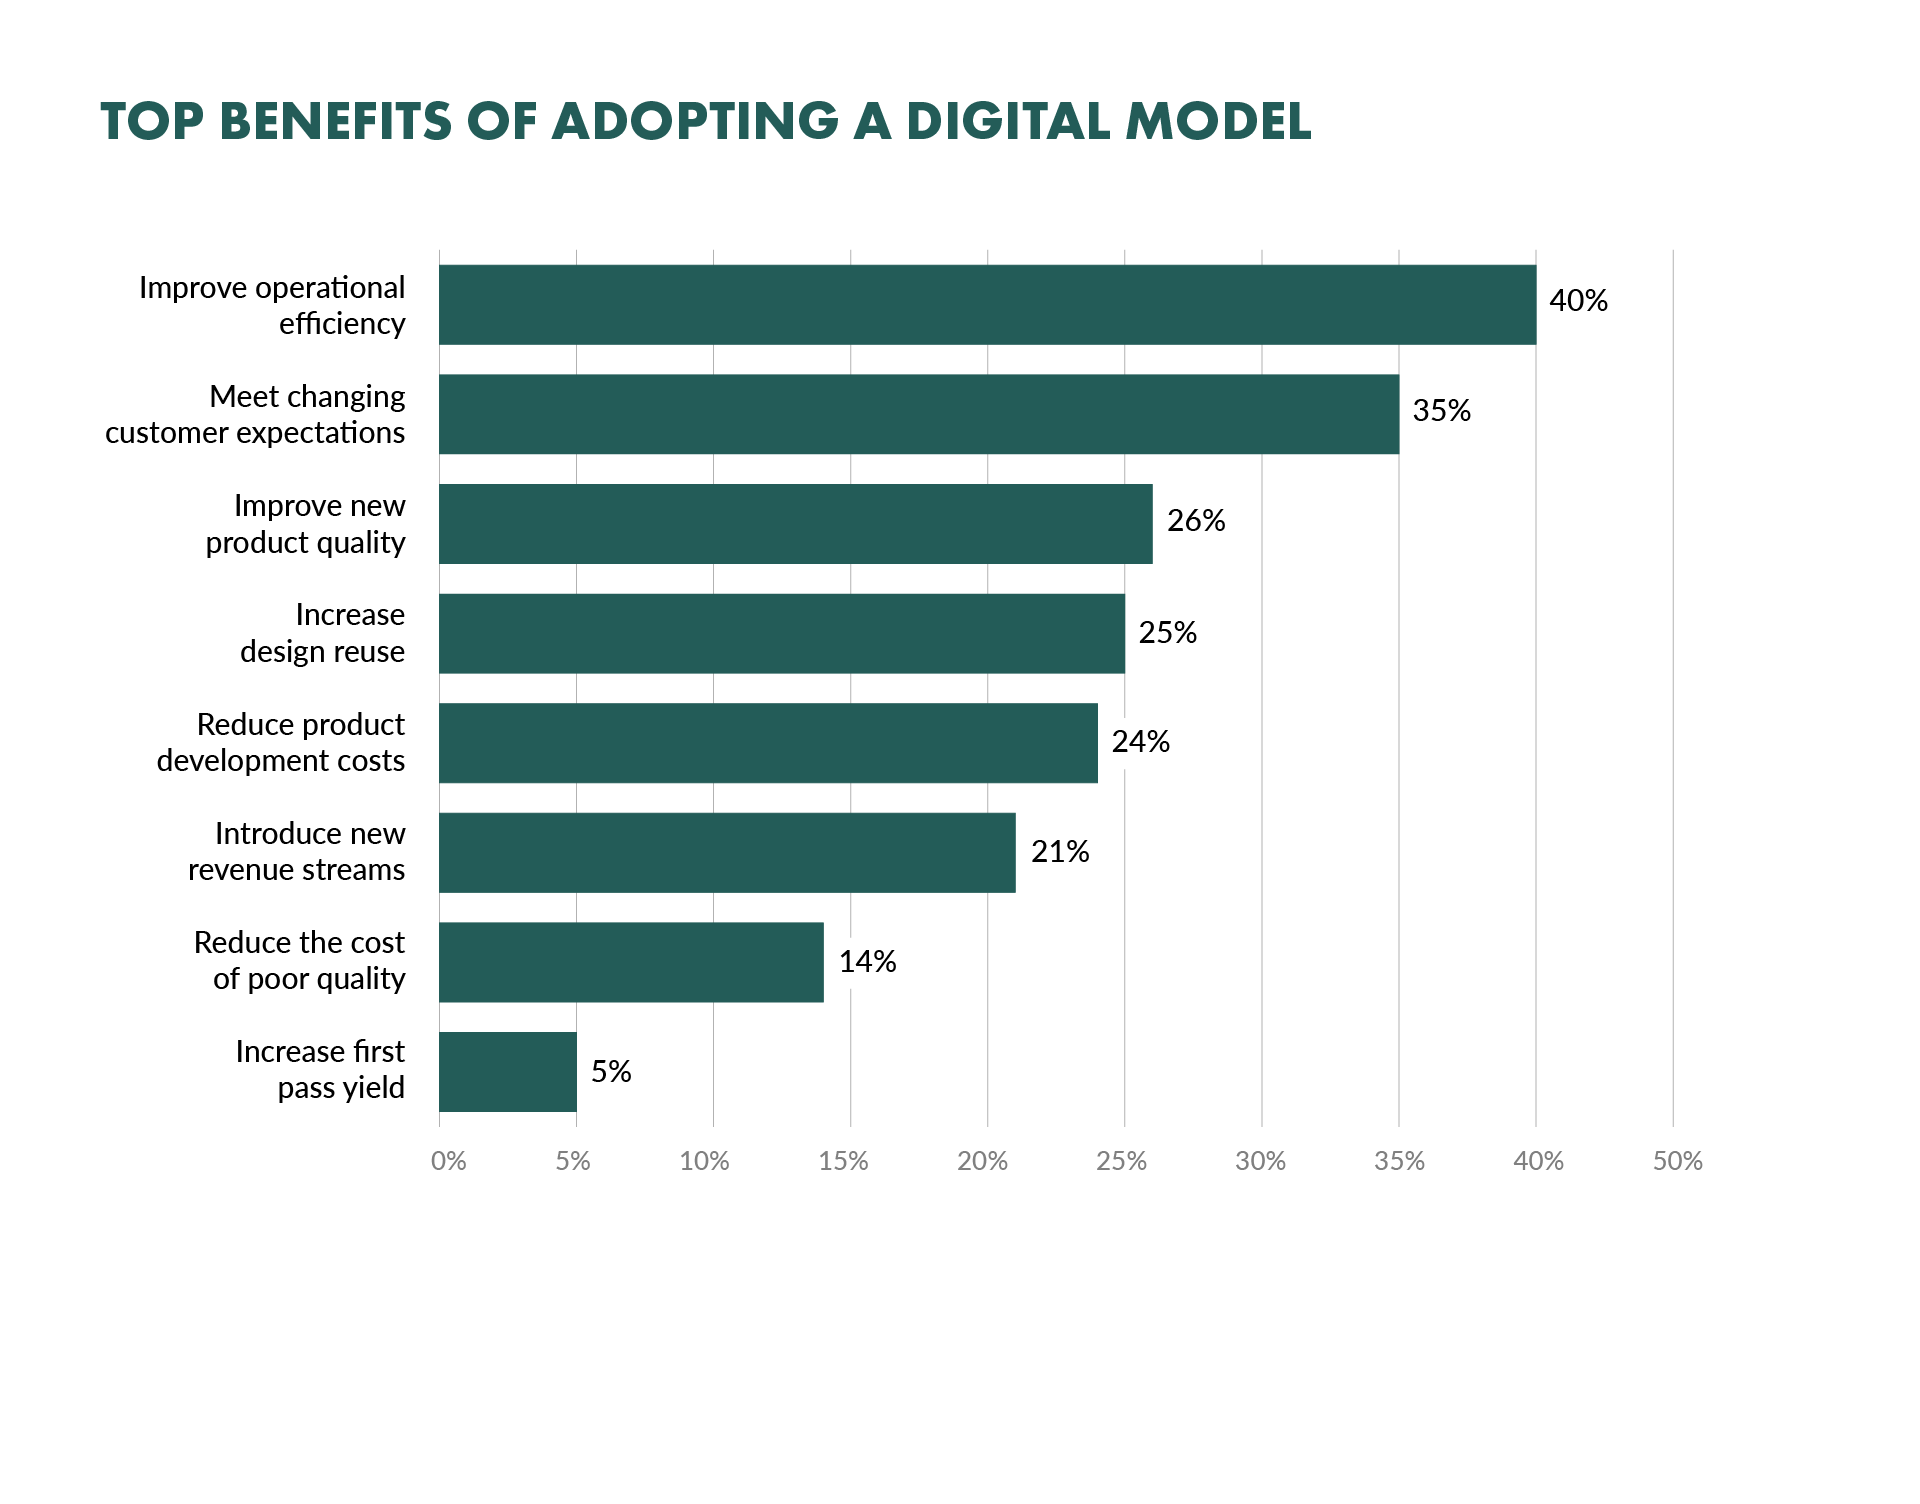 Top benefits of adopting a digital model